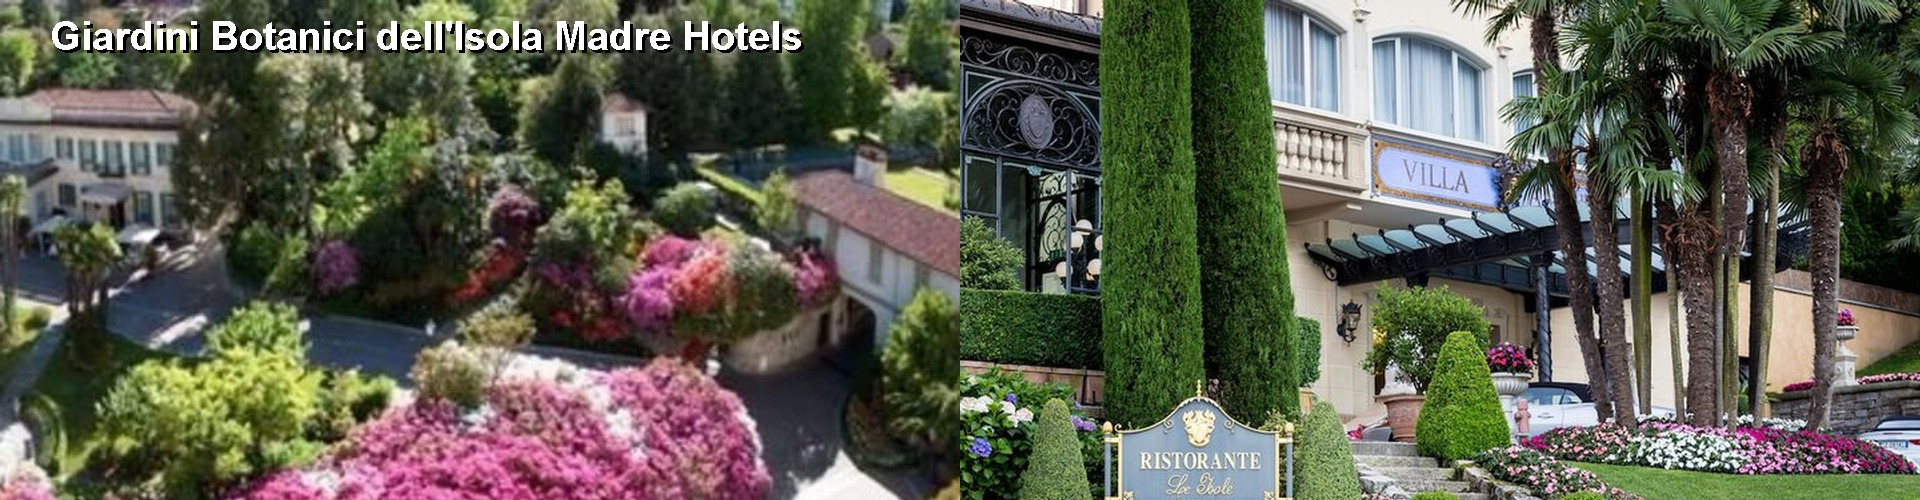 5 Best Hotels near Giardini Botanici dell'Isola Madre